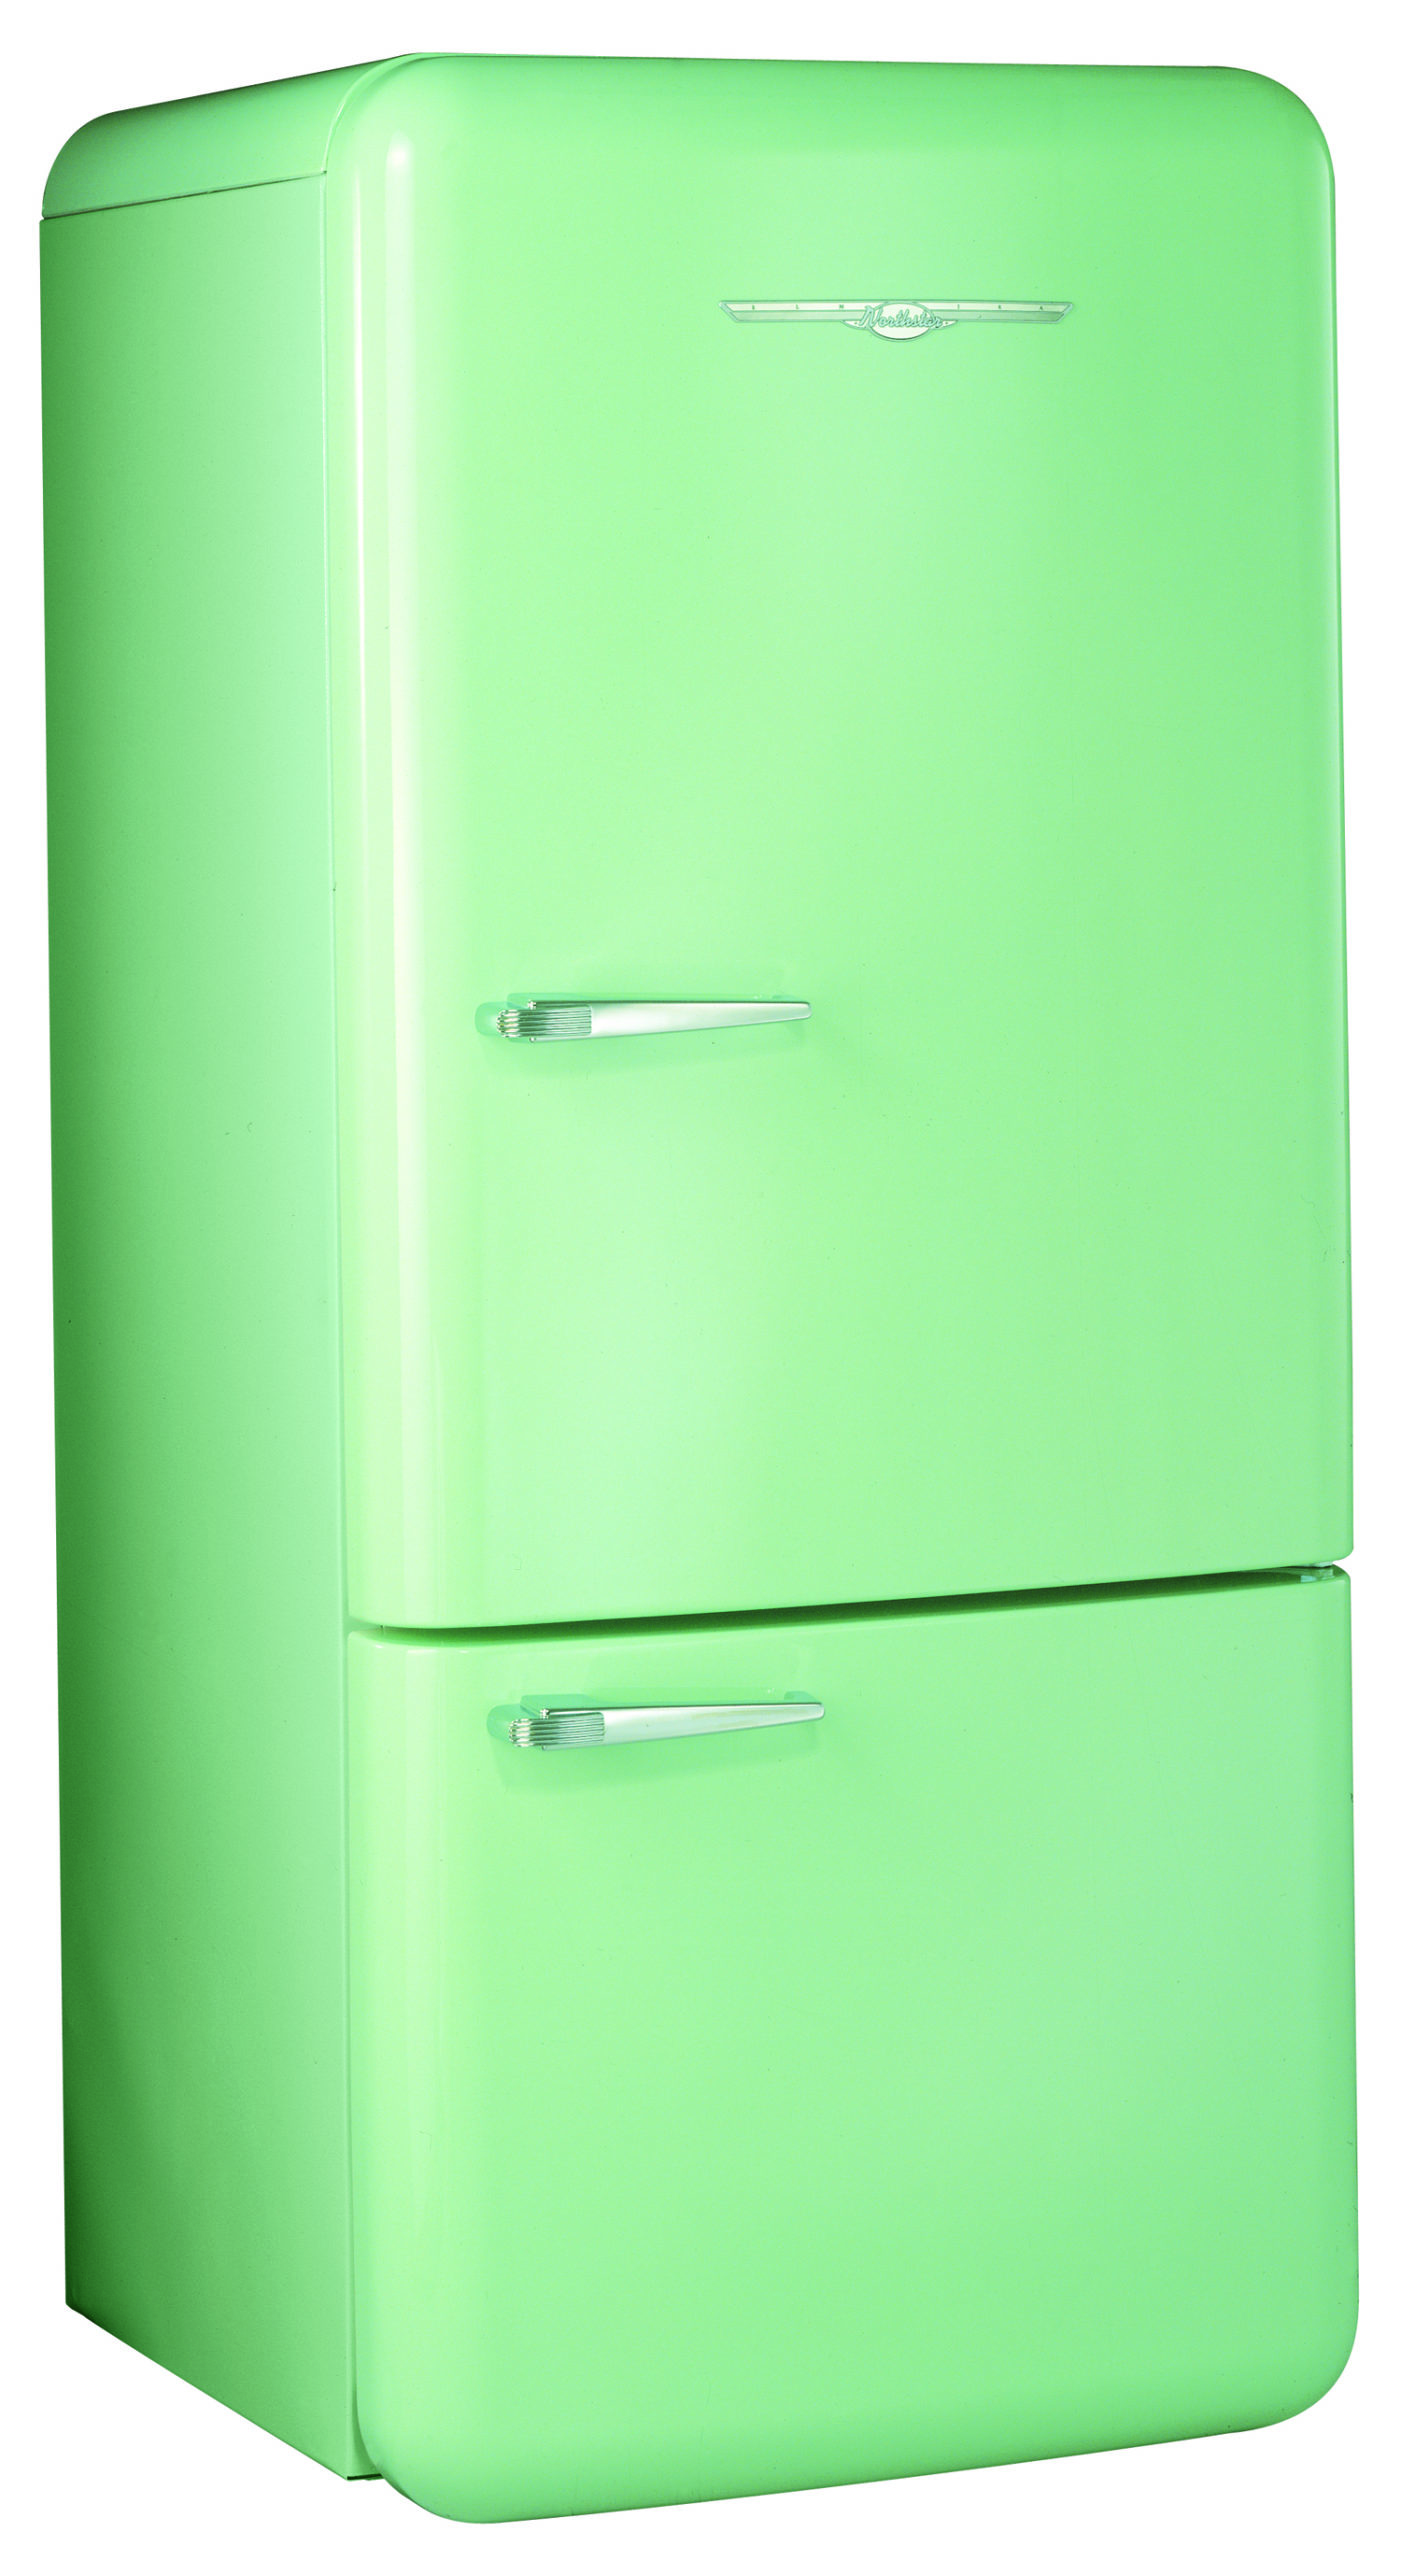 northstar-fridge-green